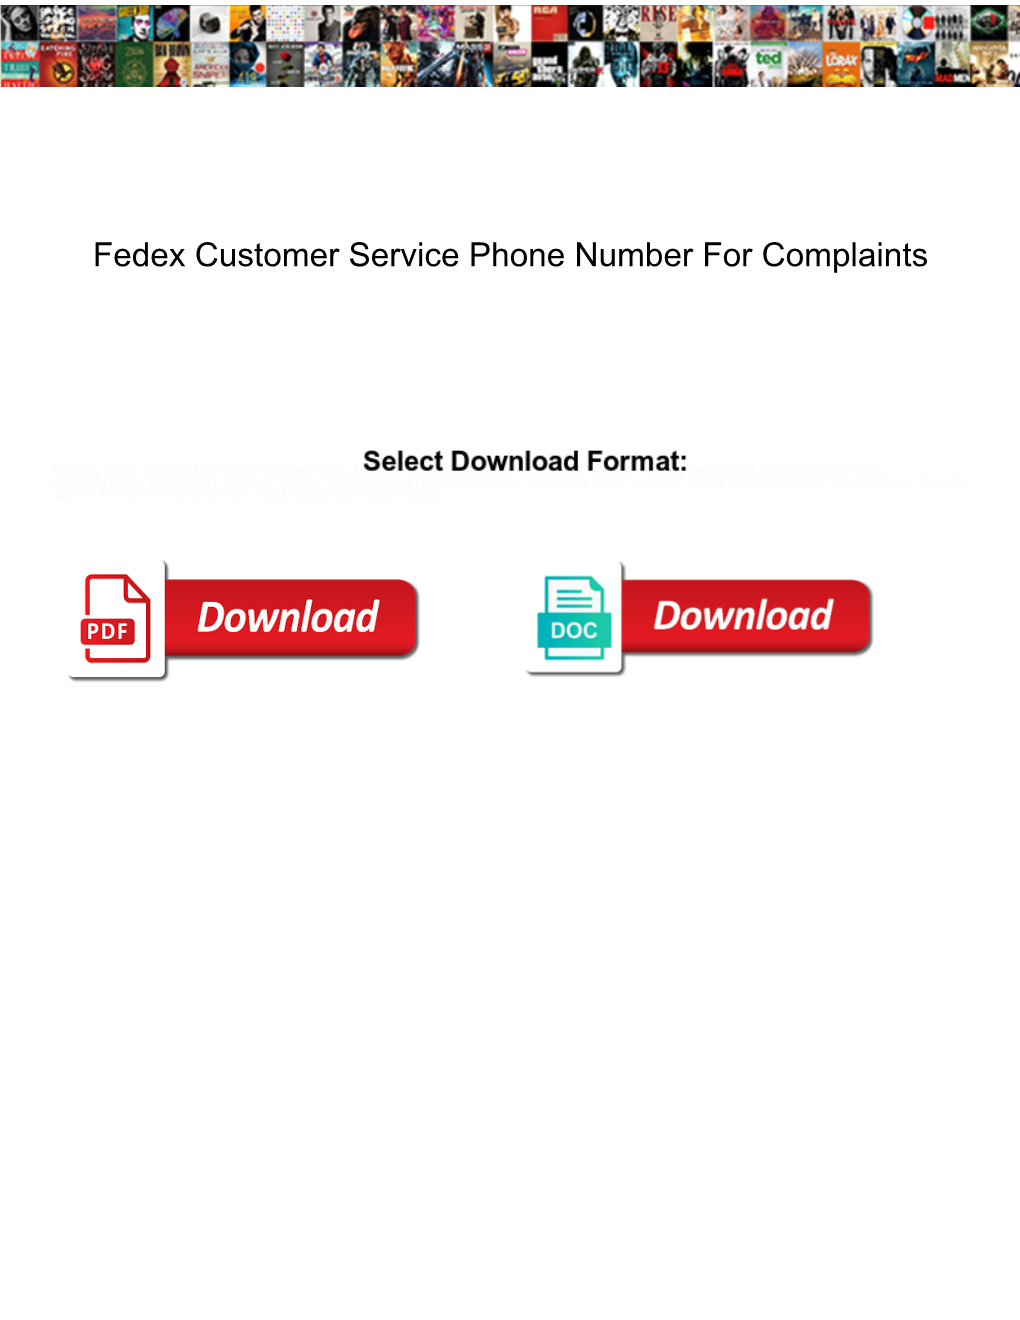 Fedex Customer Service Phone Number for Complaints